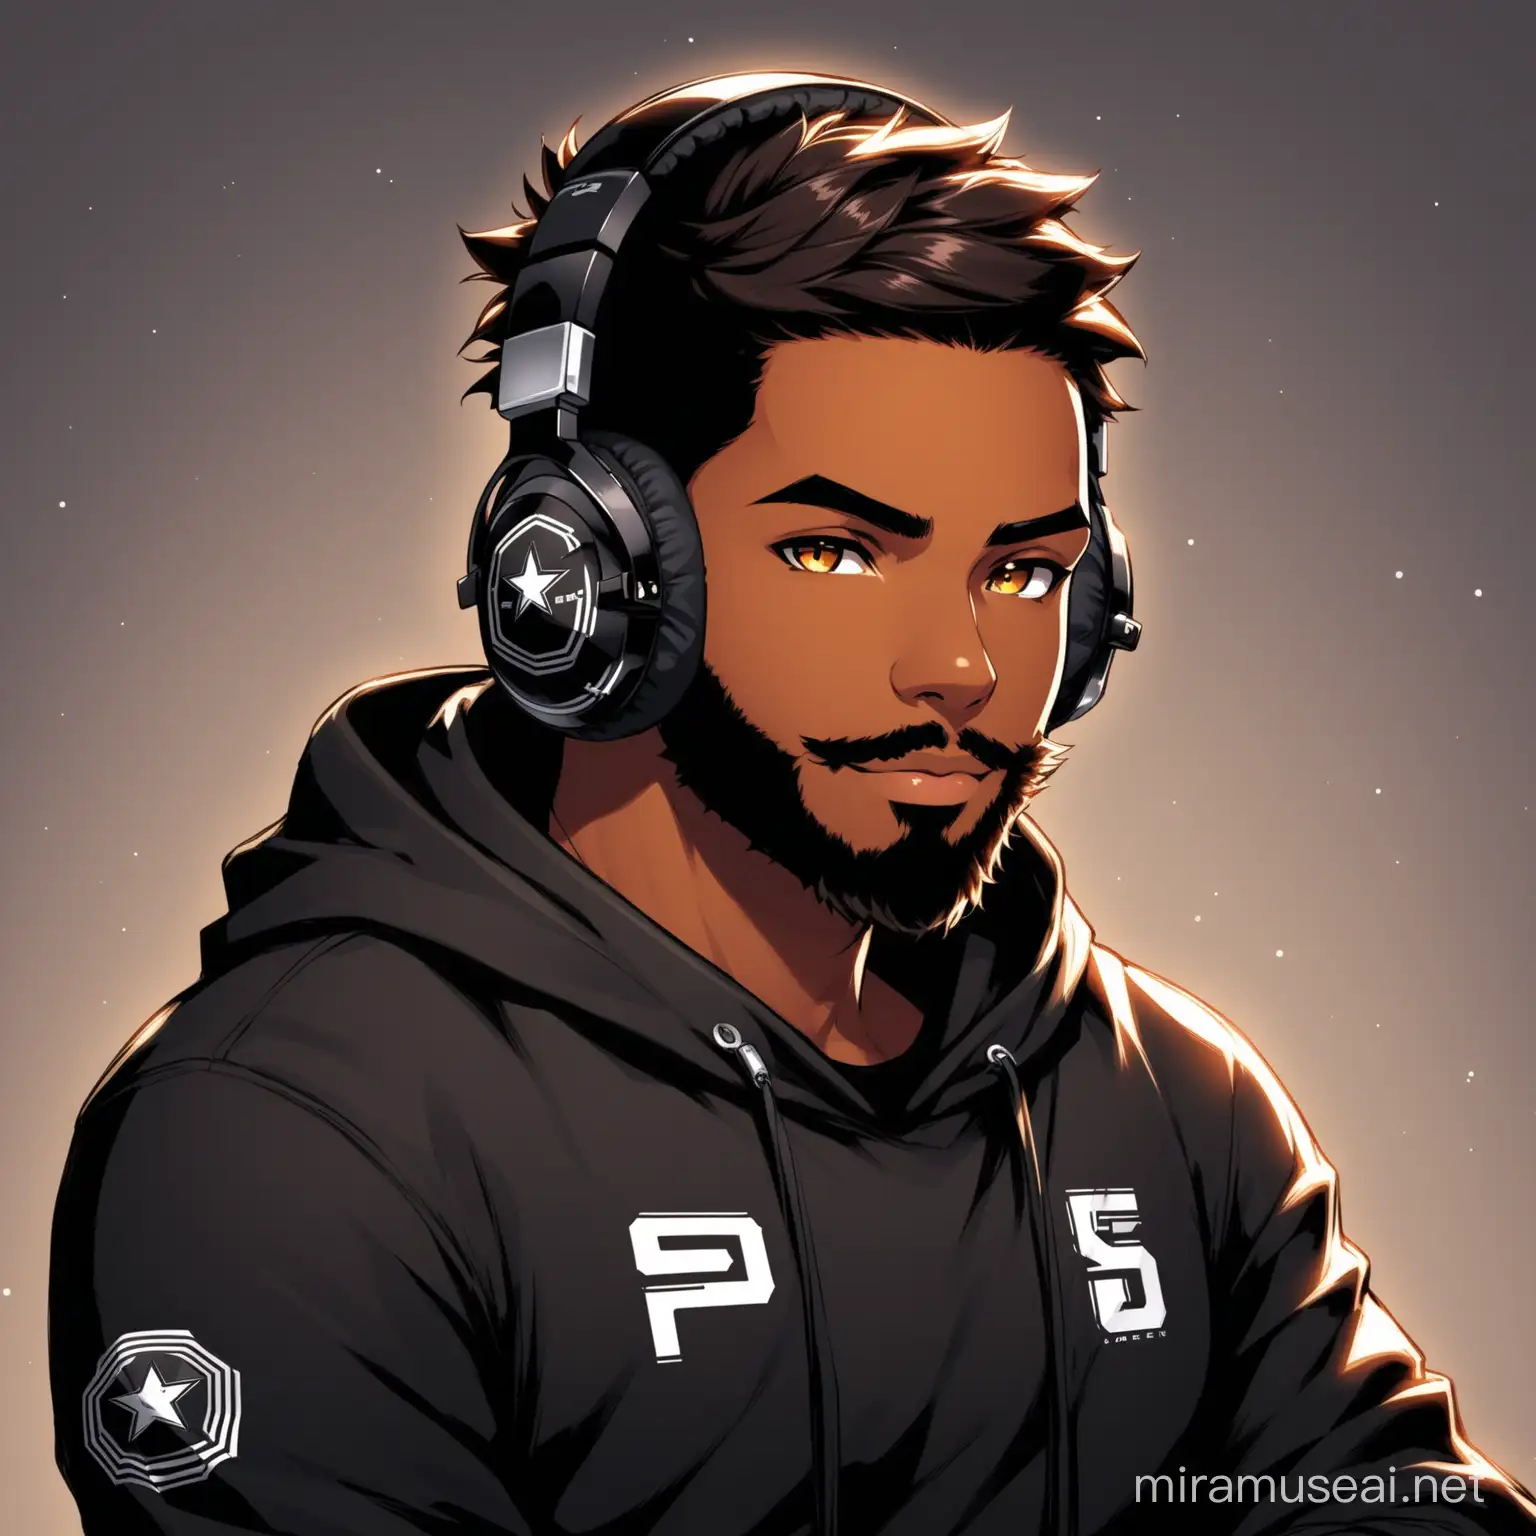 FPS Gamer with Short Beard and Headphones in Black Jacket